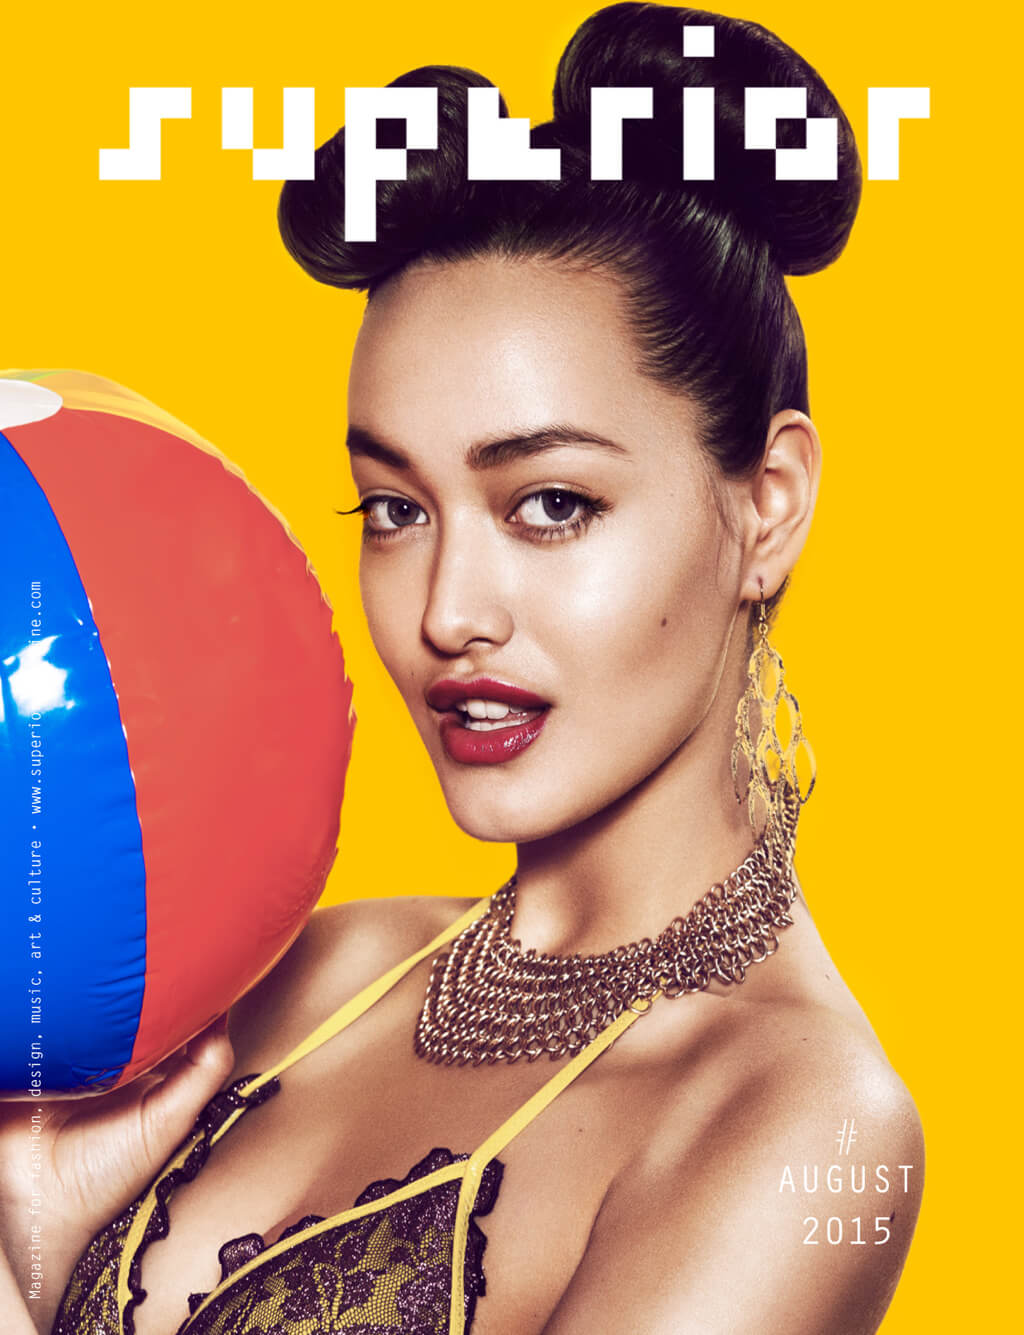 Superior Magazine # August 2015 - Cover by Kia Hartelius